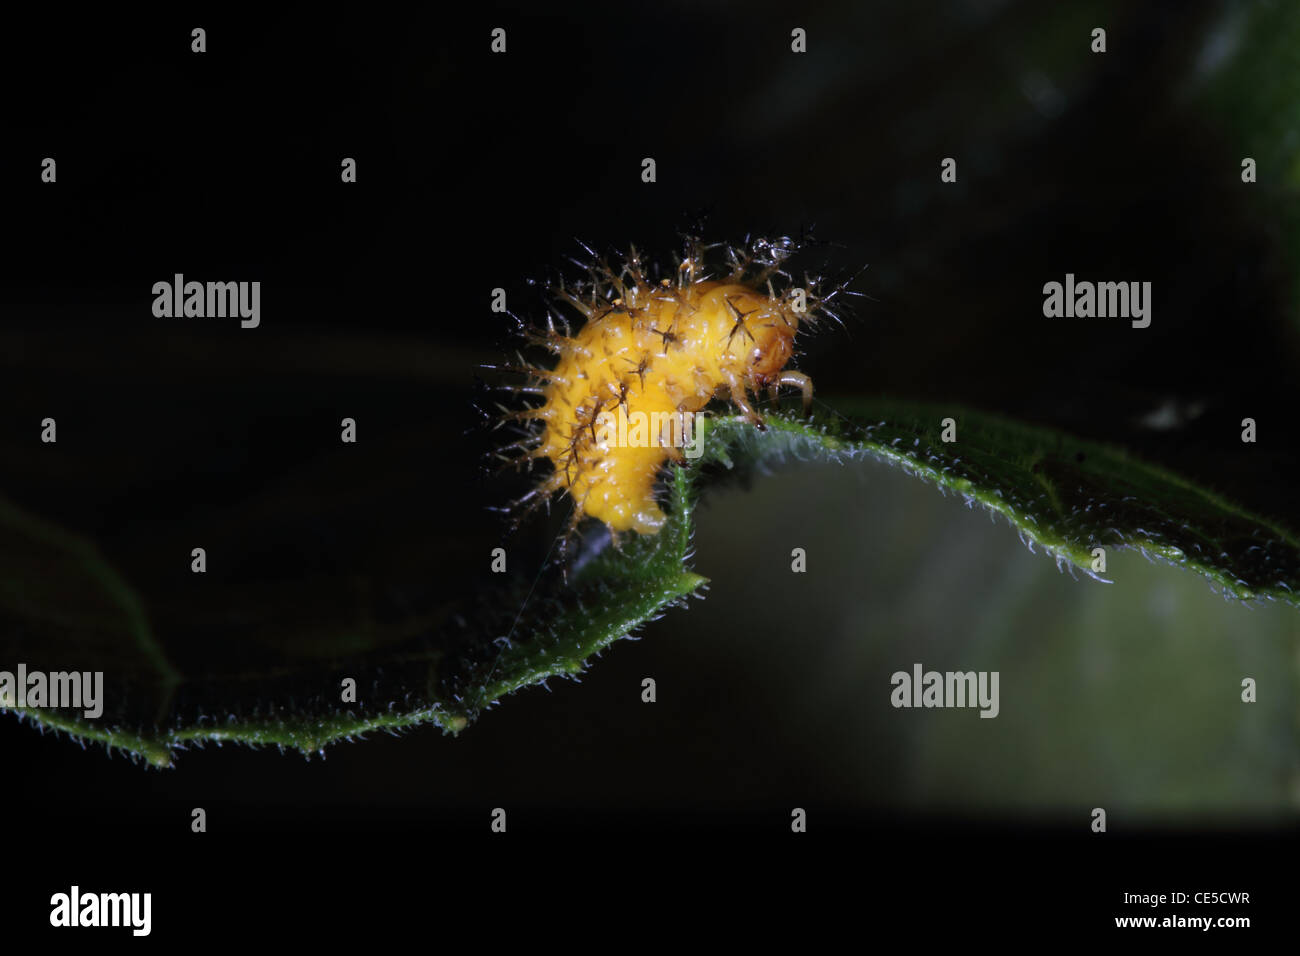 28-spotted Potato Ladybird - Epilachna vigintioctopunctata (synonym Henosepilachna vigintioctopunctata) larva Stock Photo